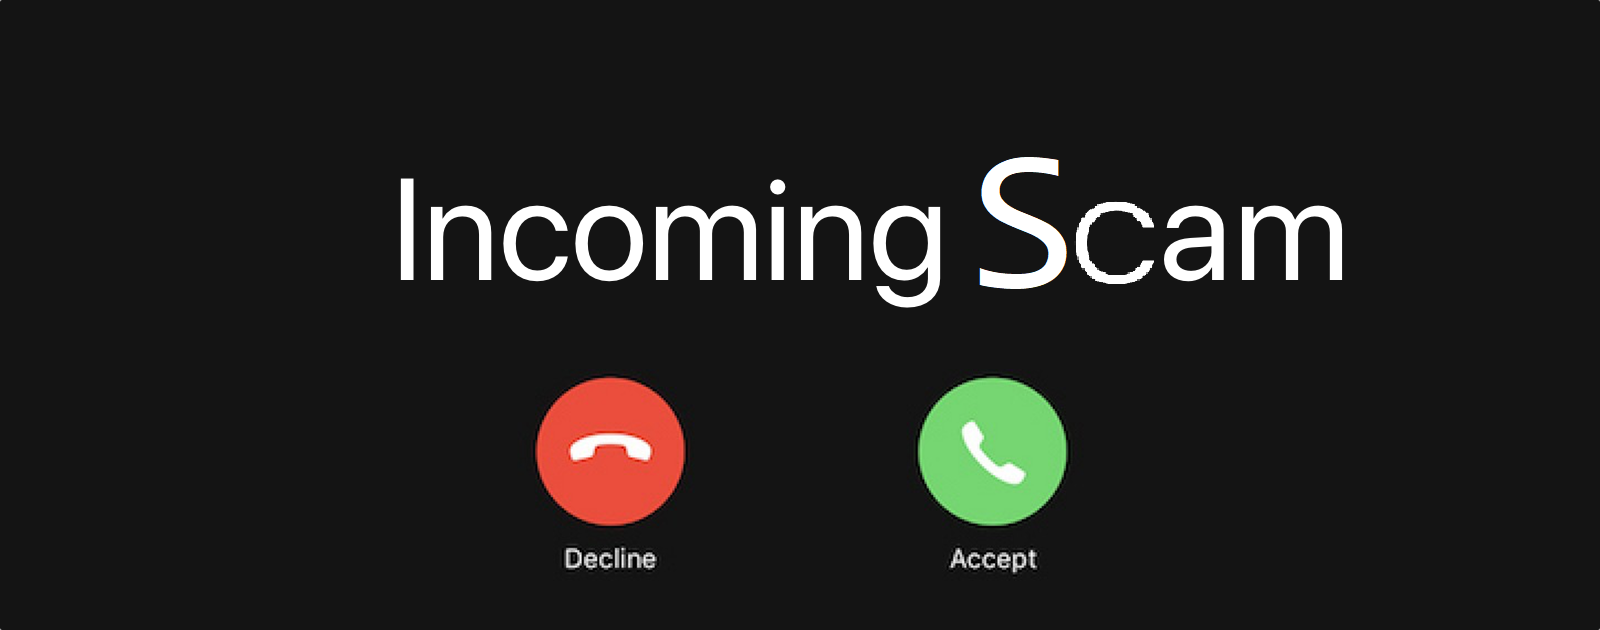 Incoming Call. Accept звонок. Phone incoming Call. Входящий звонок. Accept call